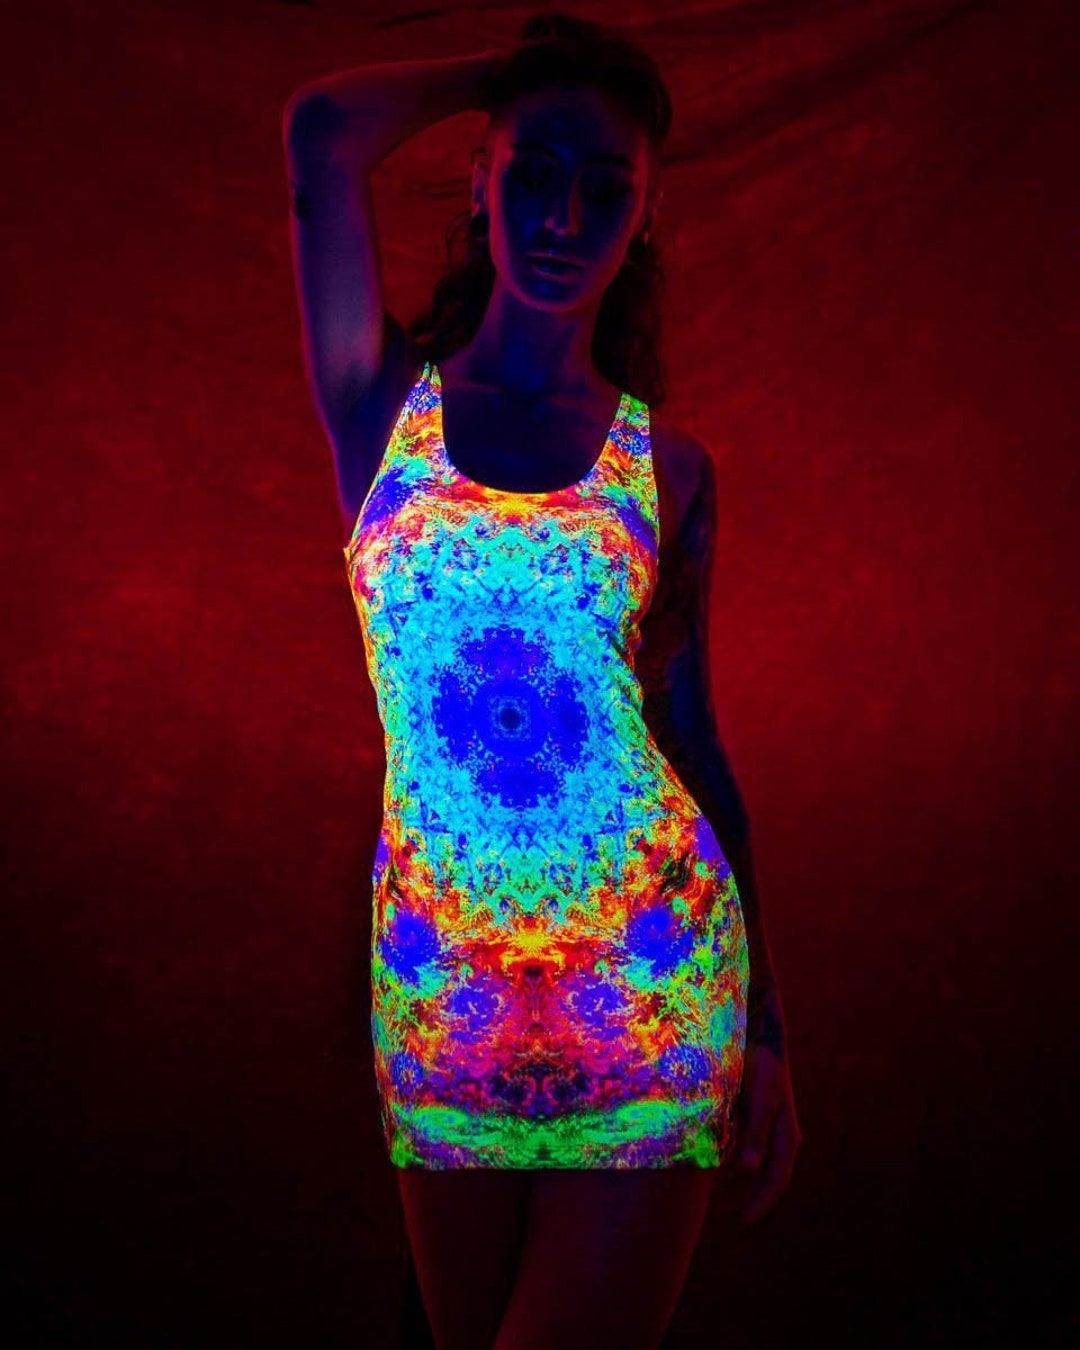 UV Reactive Dress Psy Clothing Sacred Geometry Dress - Etsy